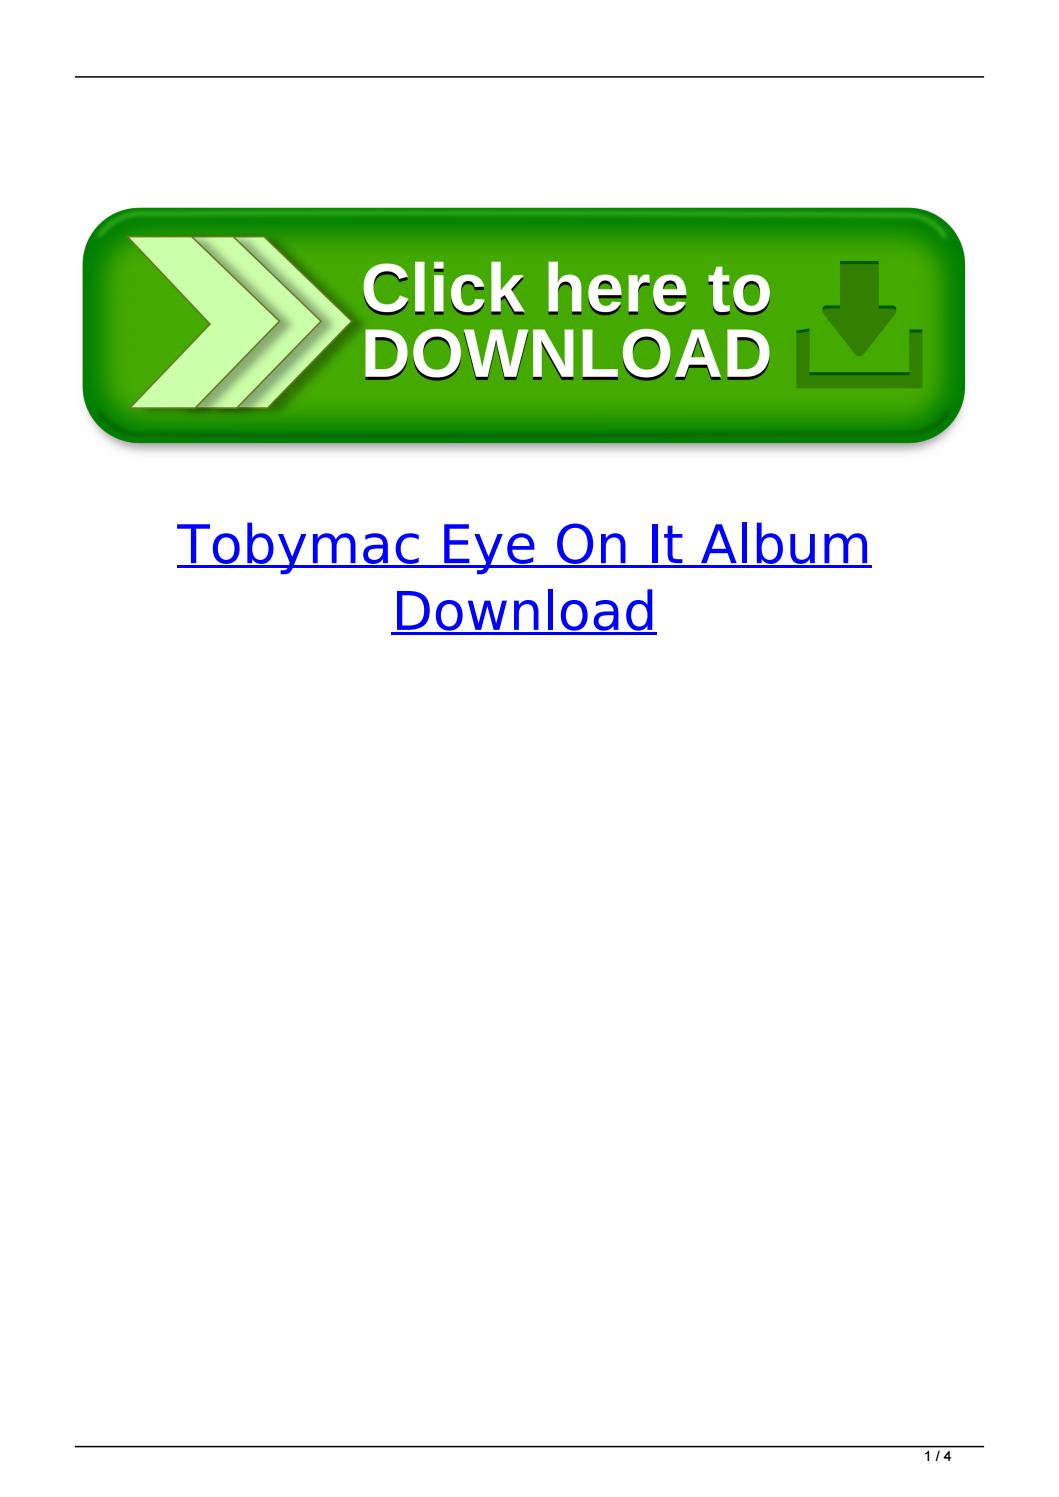 Tobymac songs youtube